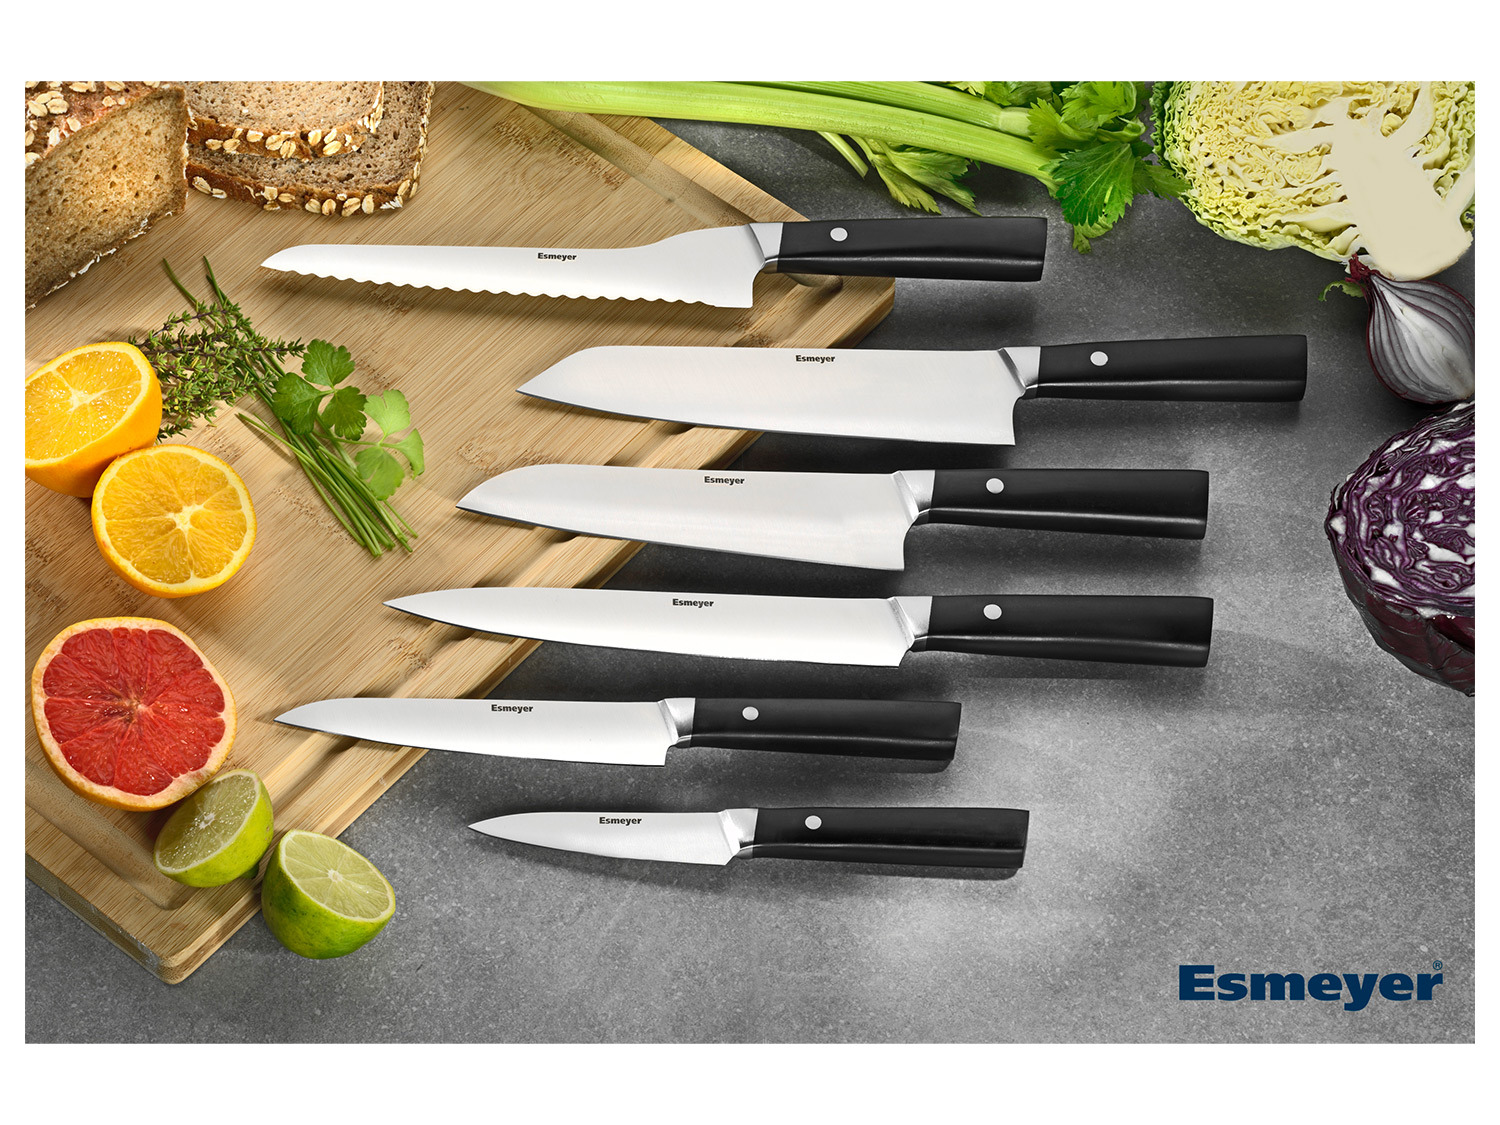 Esmeyer Asia Messerset 6-teilig aus Edelstahl | LIDL